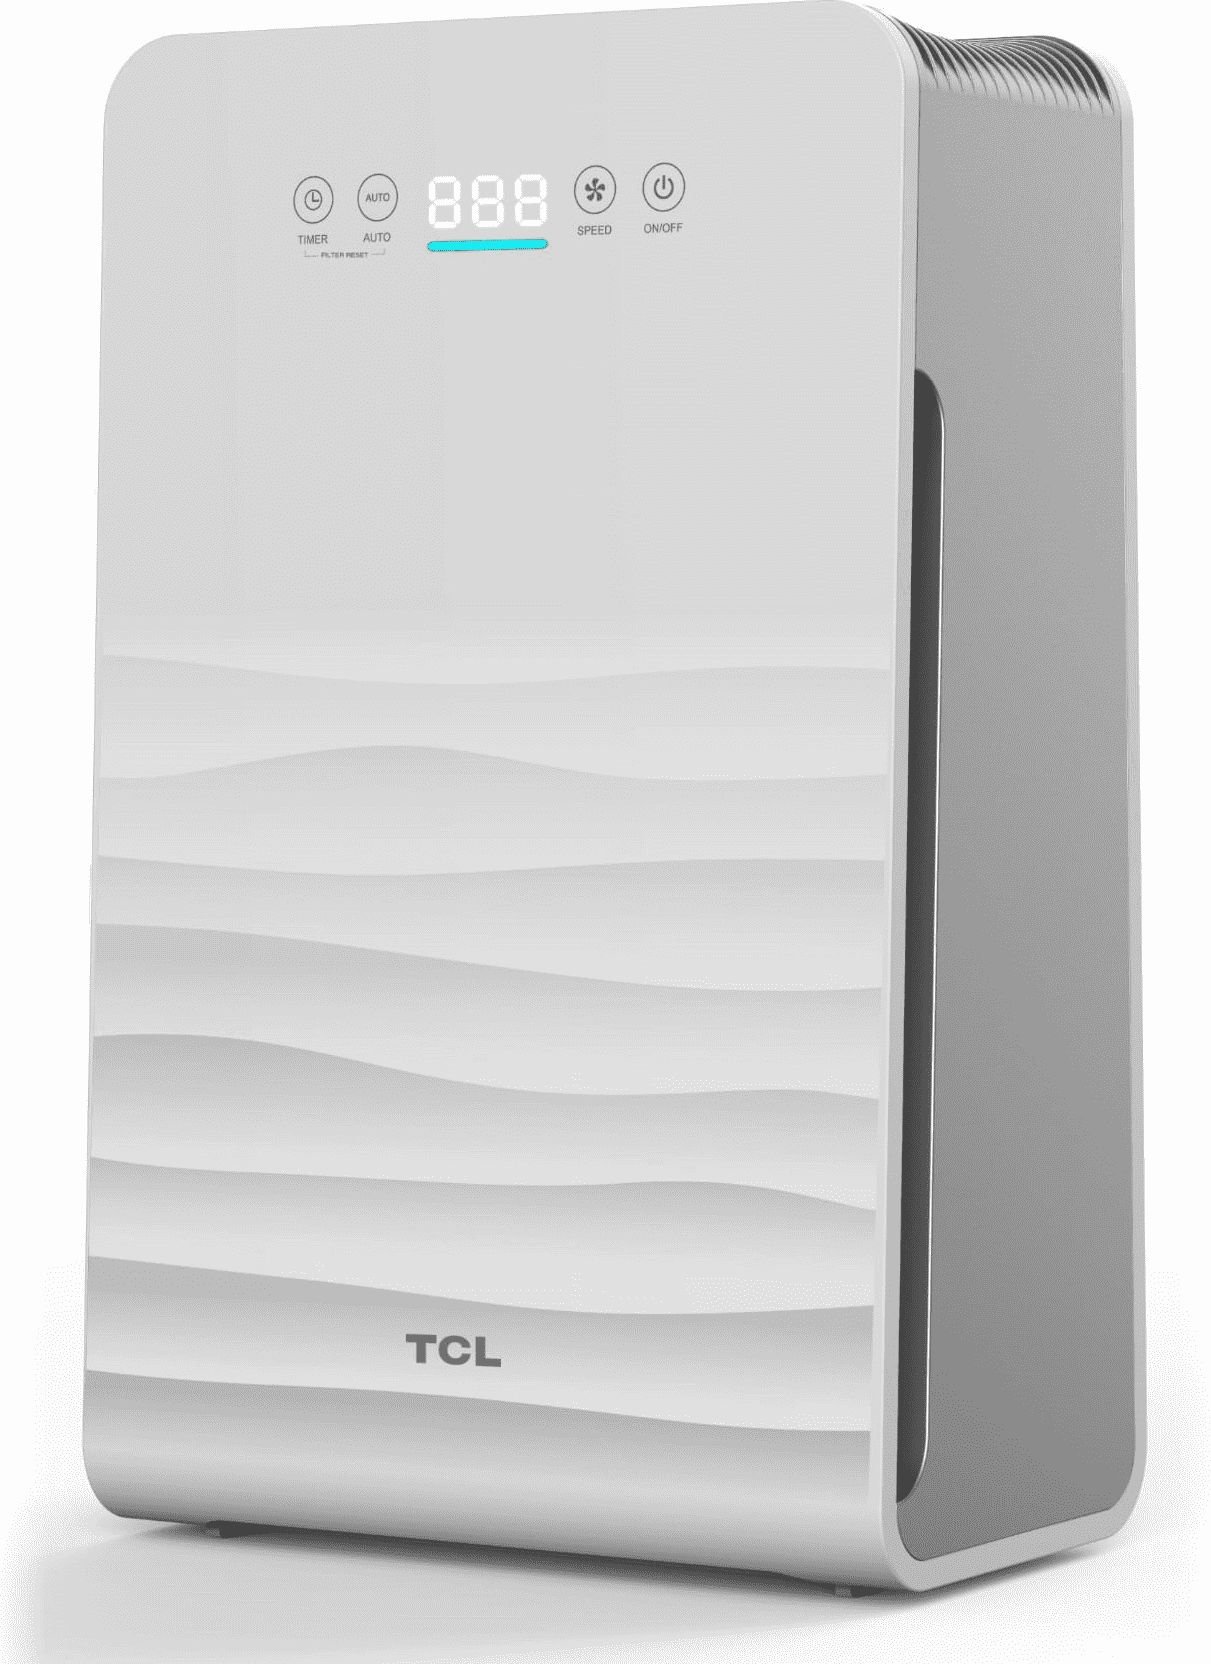 Aparate filtrare aer - Purificator de aer TCL TKJ225F,
alb,
56 W,Cu ionizare